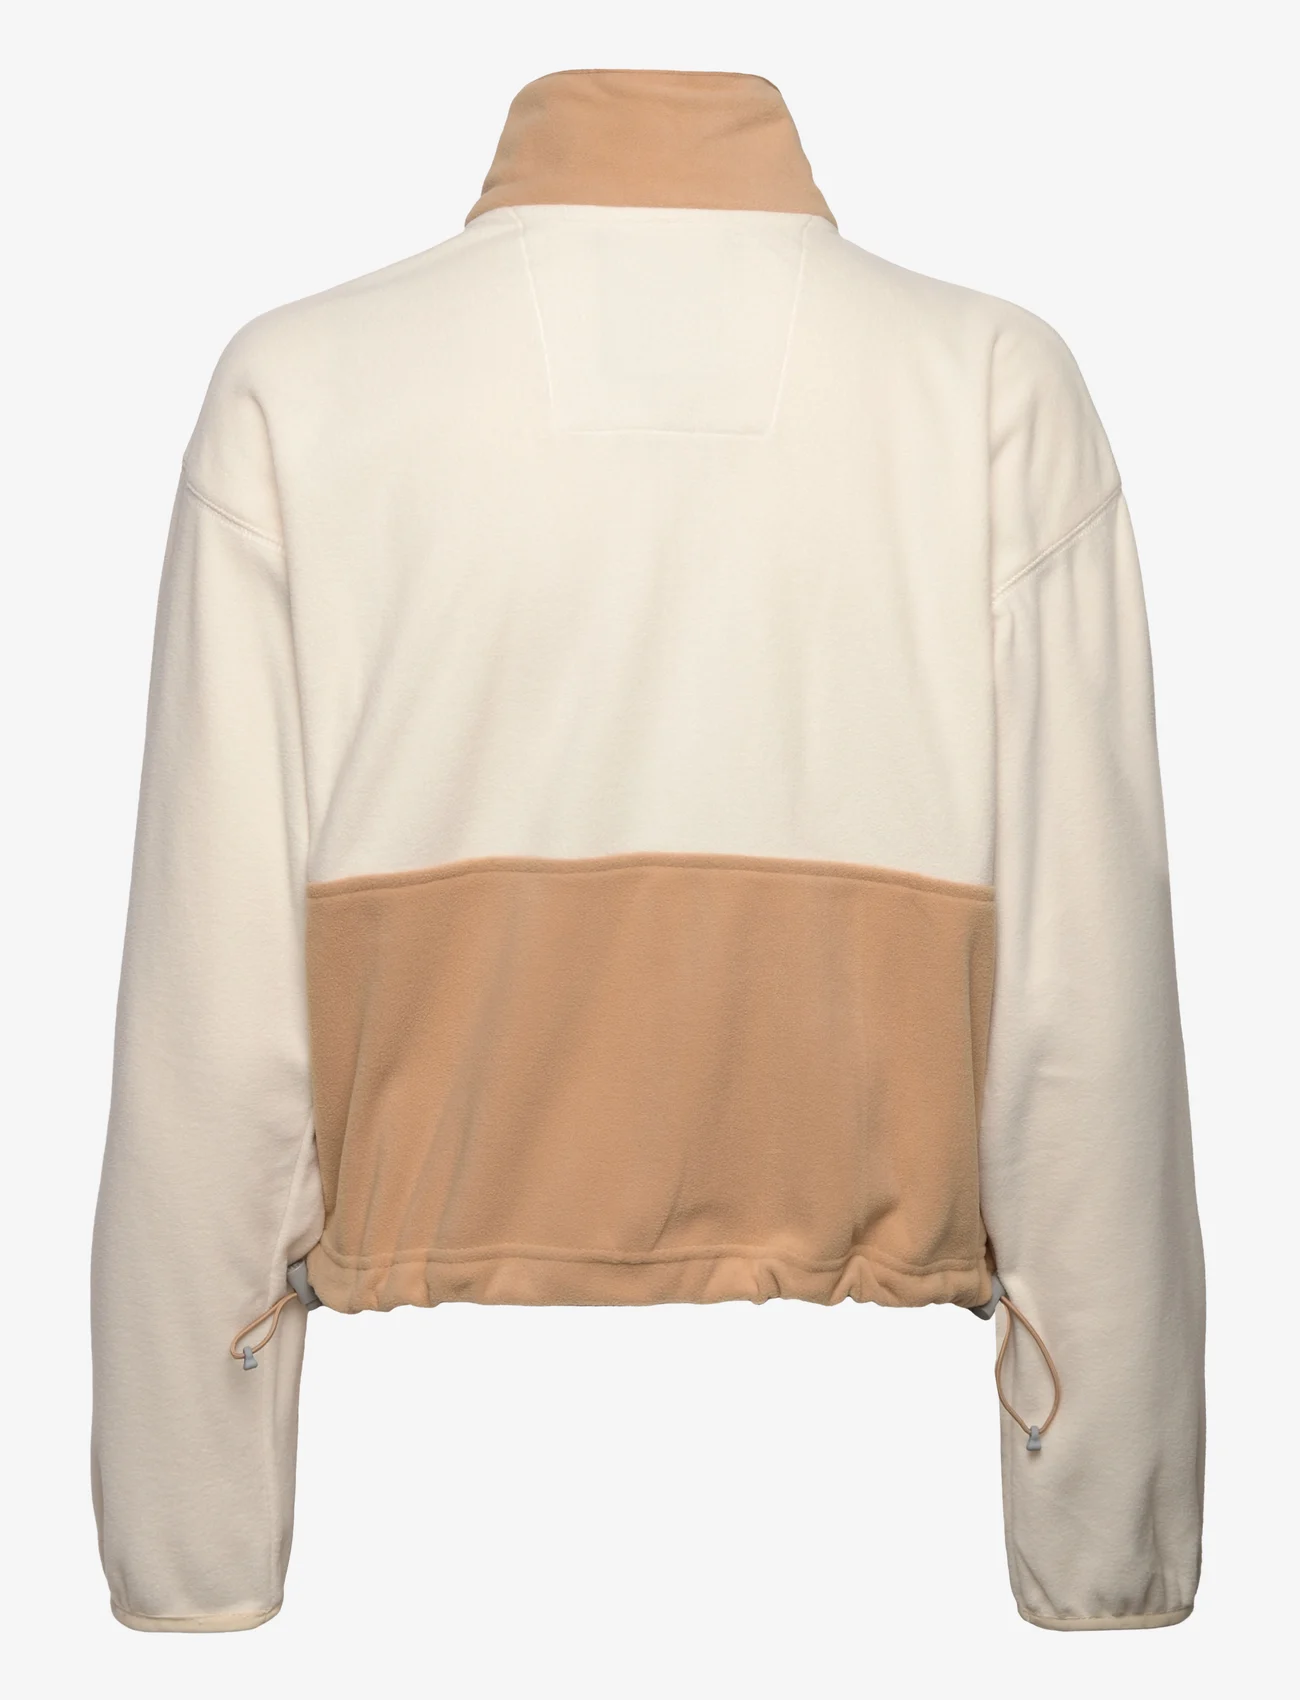 Columbia Sportswear - W Back Bowl Fleece - mid layer jackets - chalk, canoe, white - 1